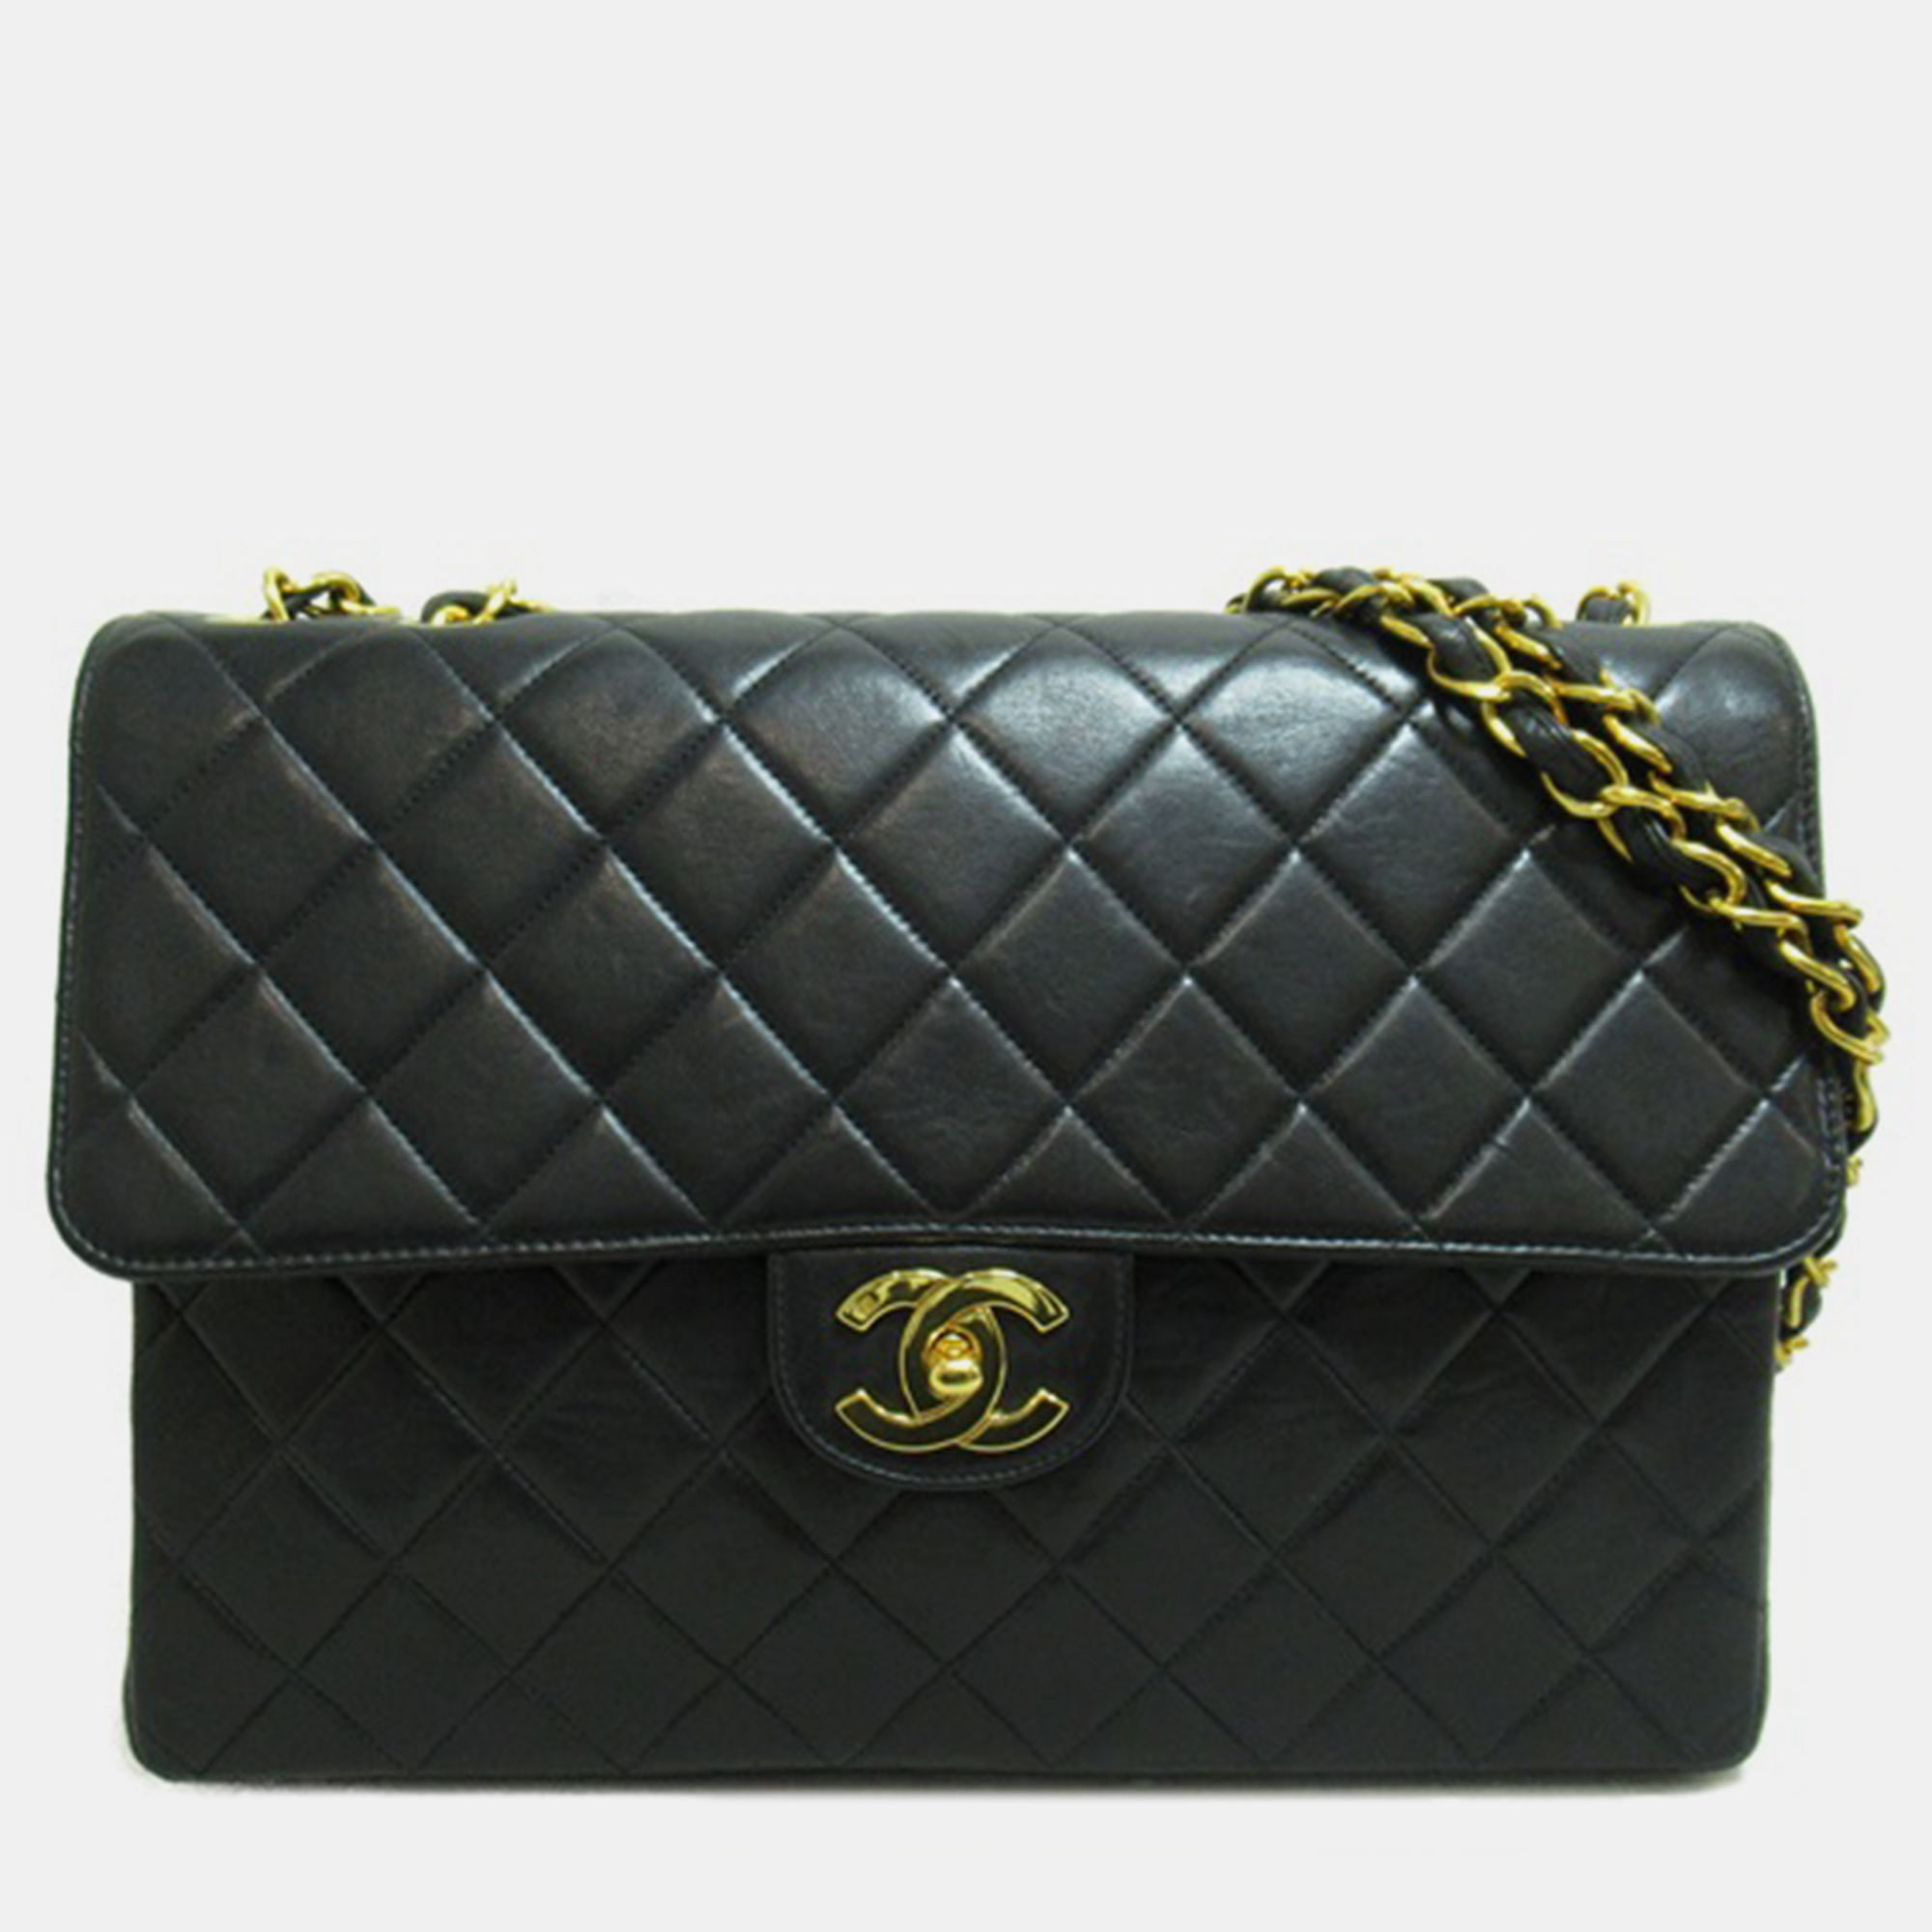 Chanel black leather jumbo classic single flap bag